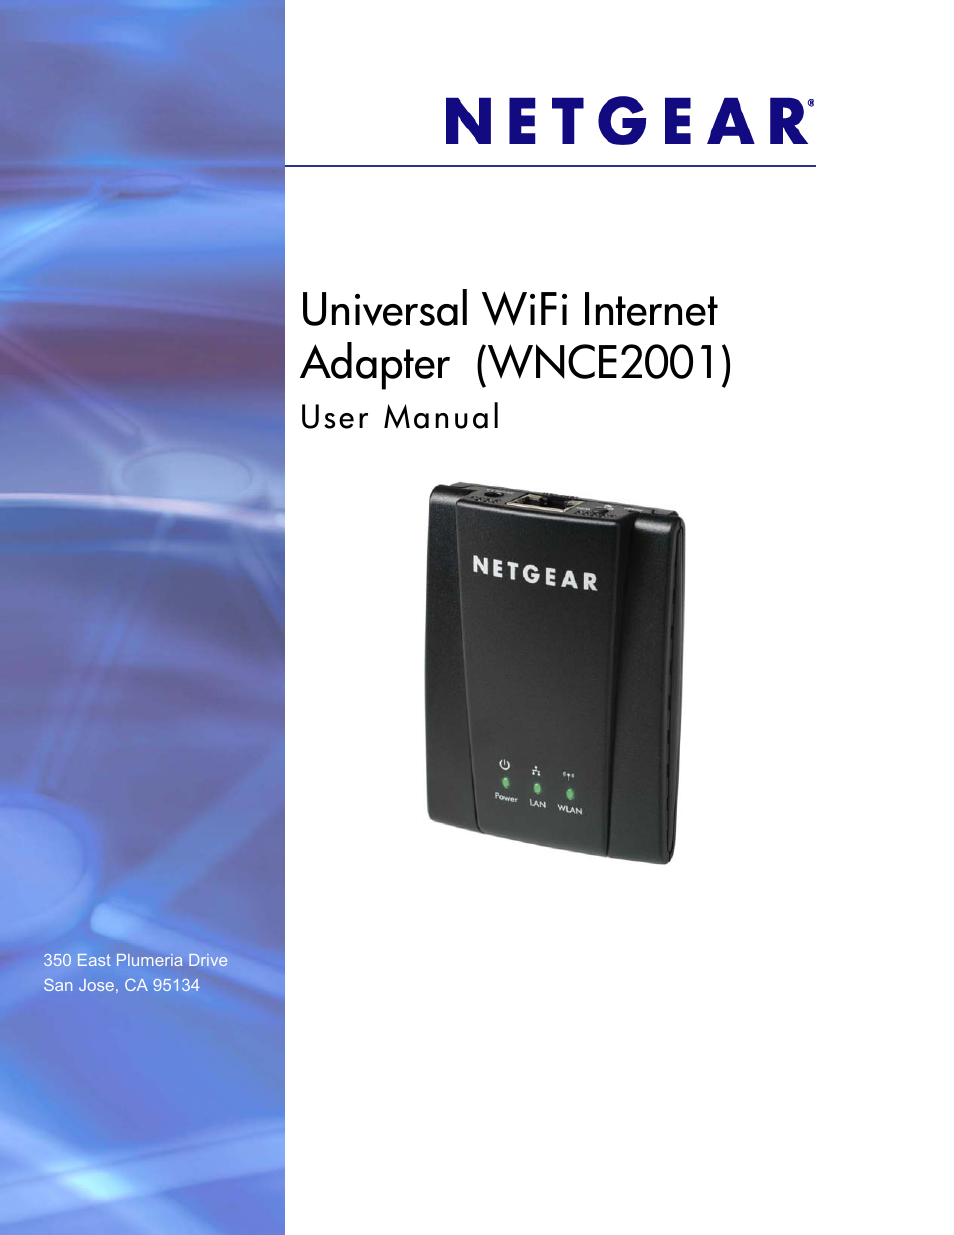 NETGEAR Universal WiFi Internet Adapter WNCE2001 User Manual | 26 pages